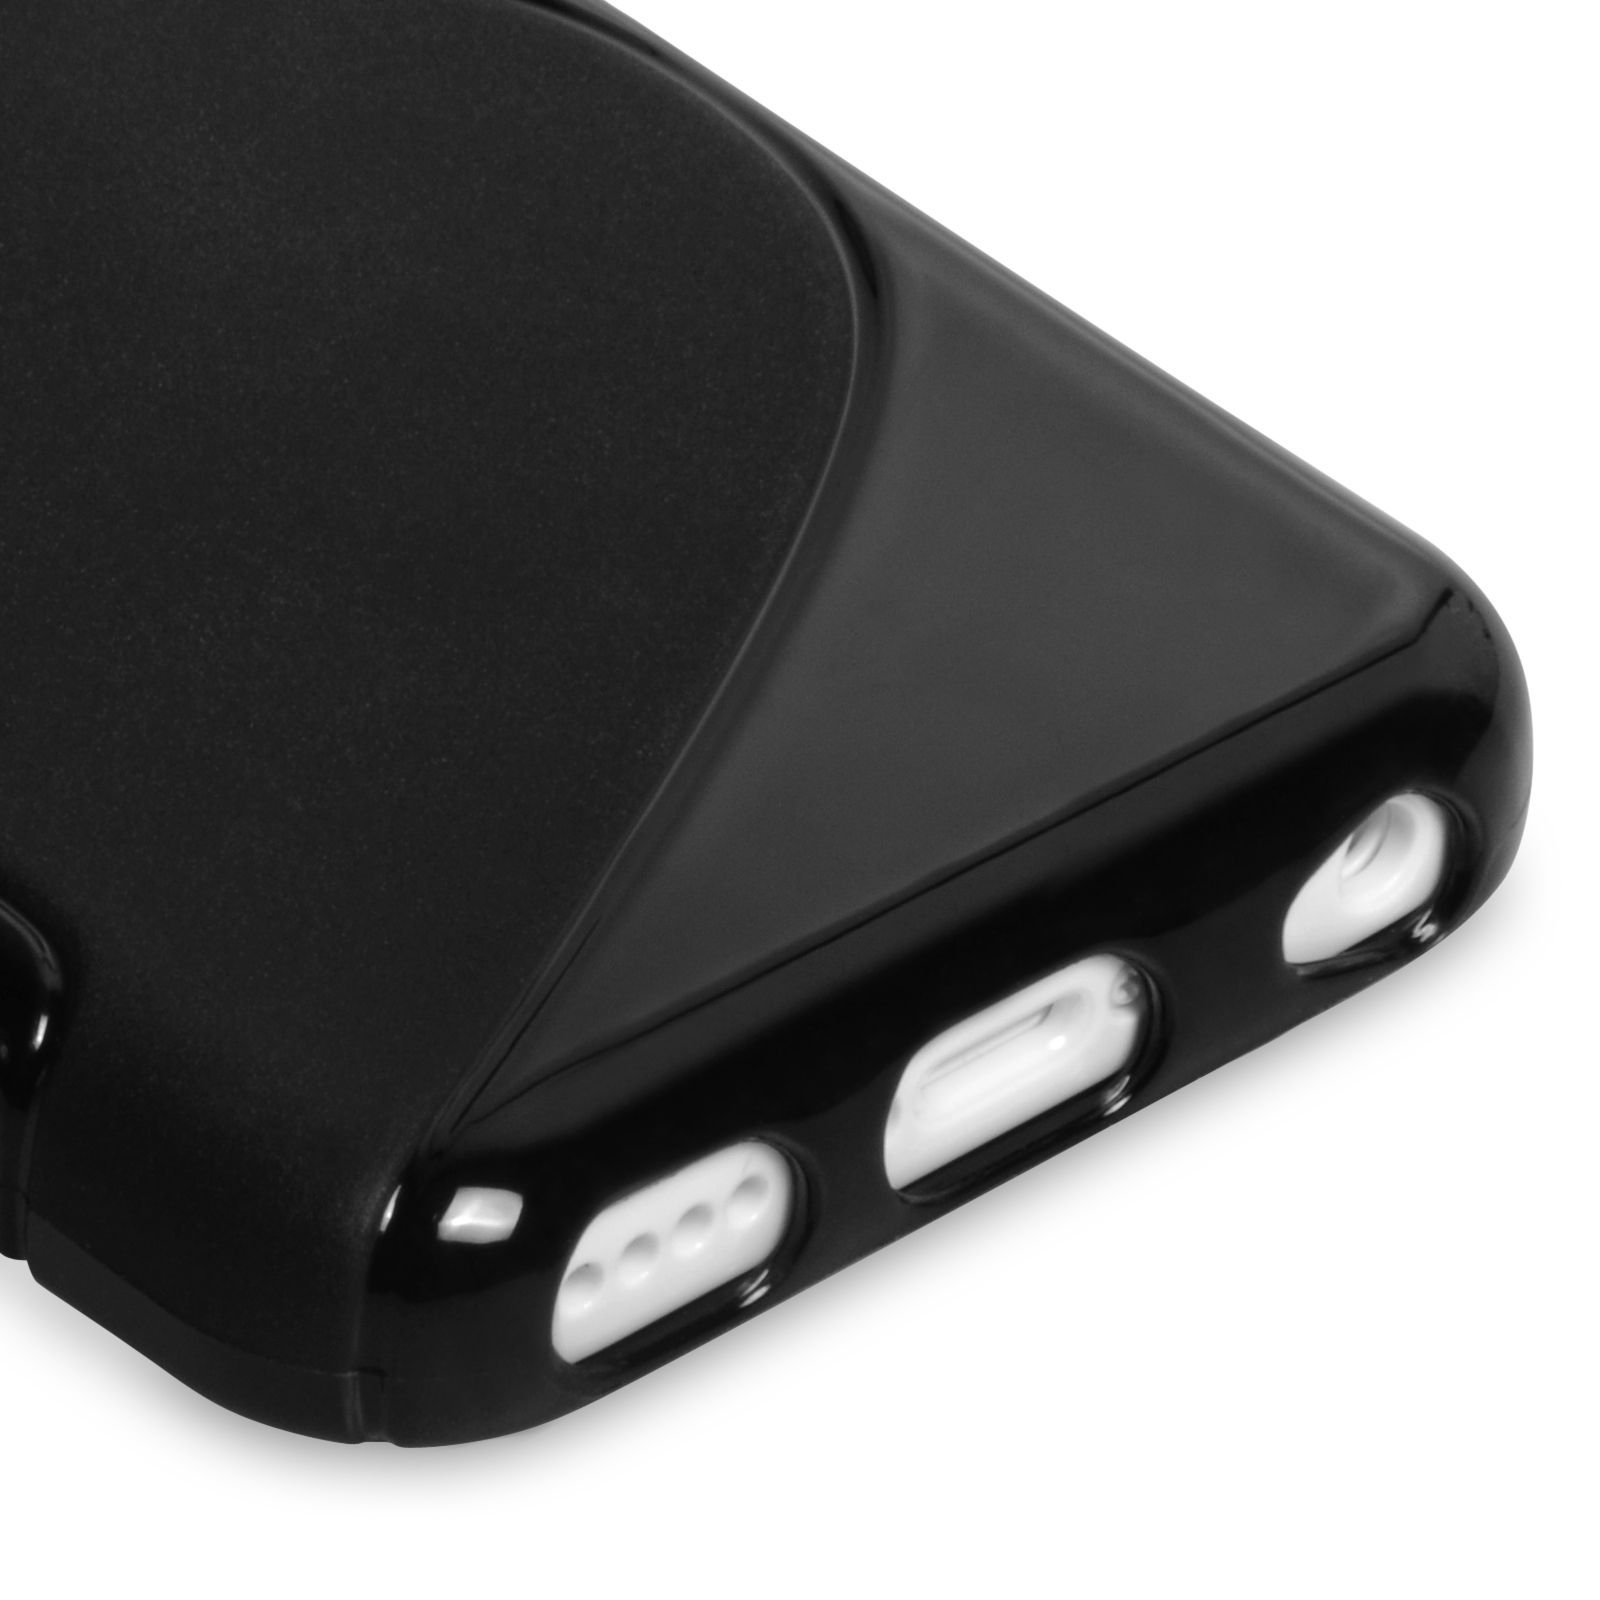 Caseflex iPhone 5c Silicone Gel S-Line Case - Black